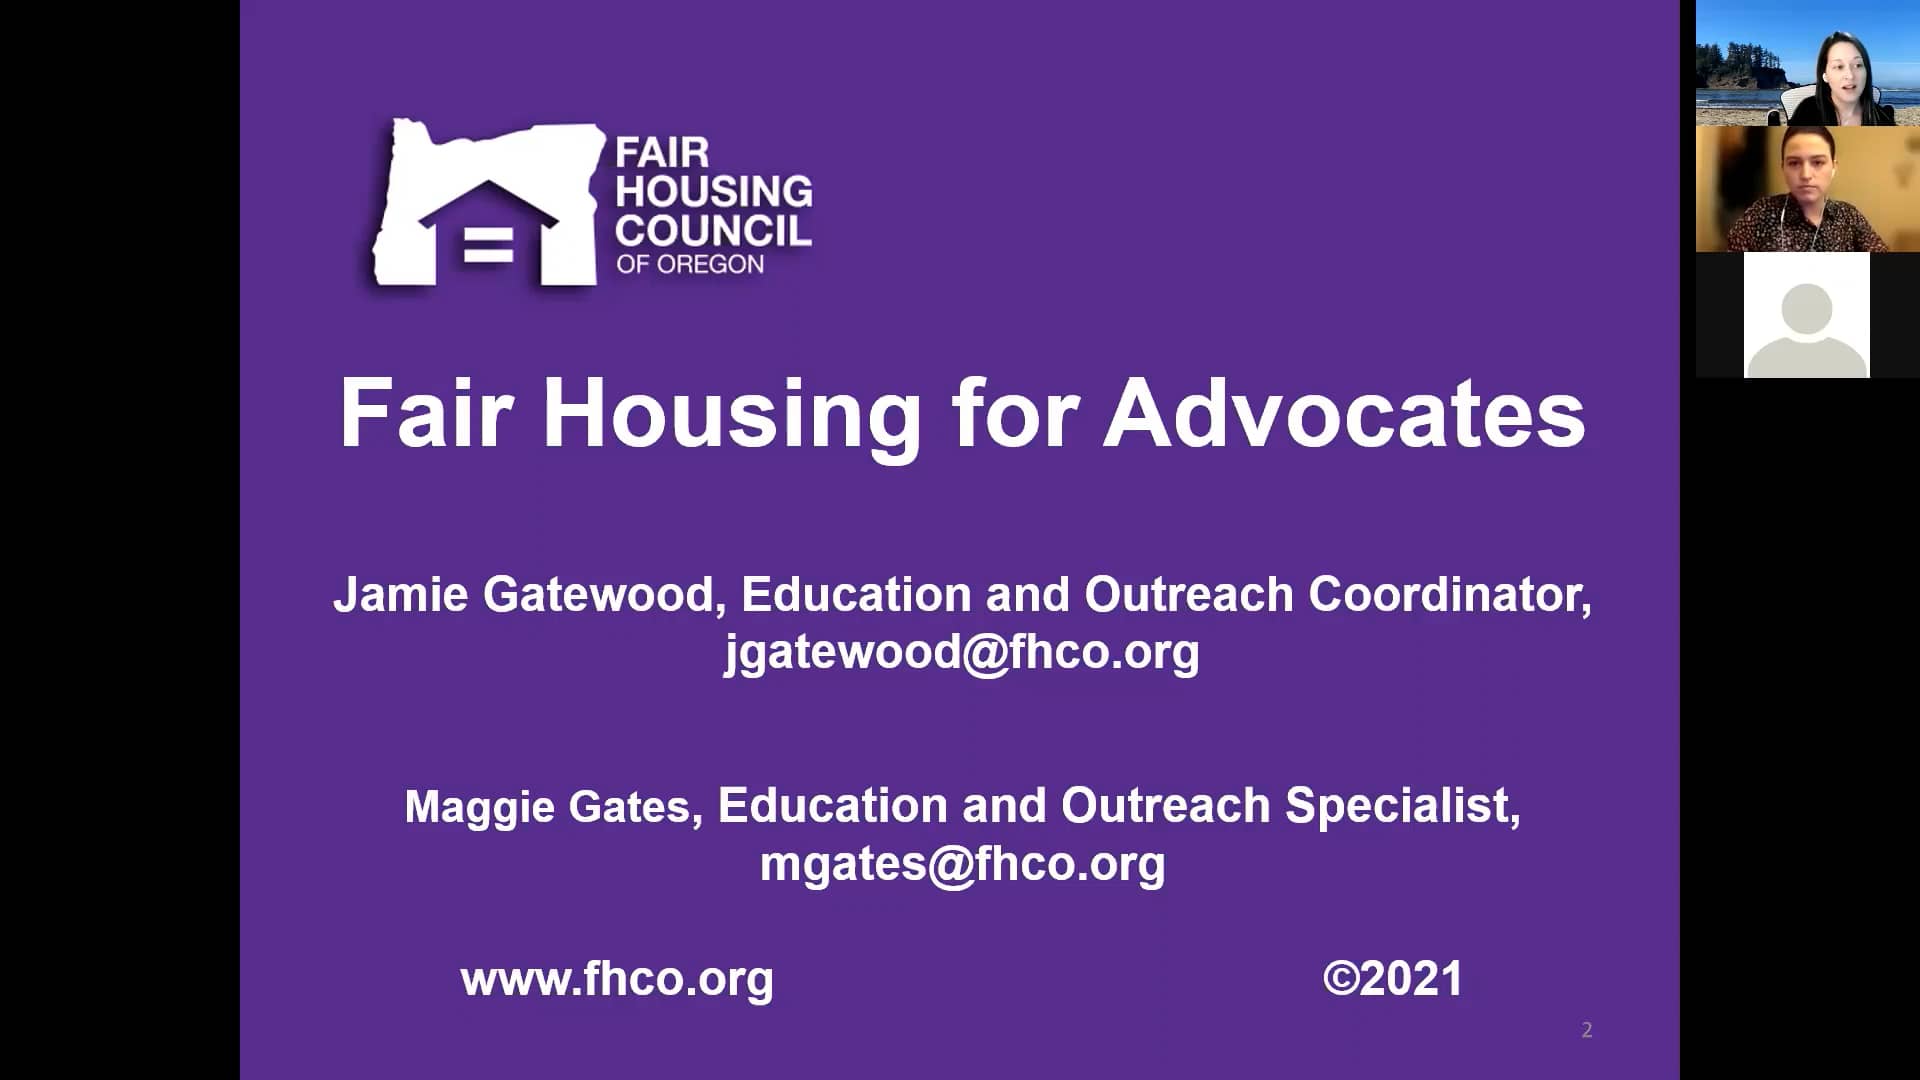 Fair Housing for Advocates 11-2021.mp4 on Vimeo